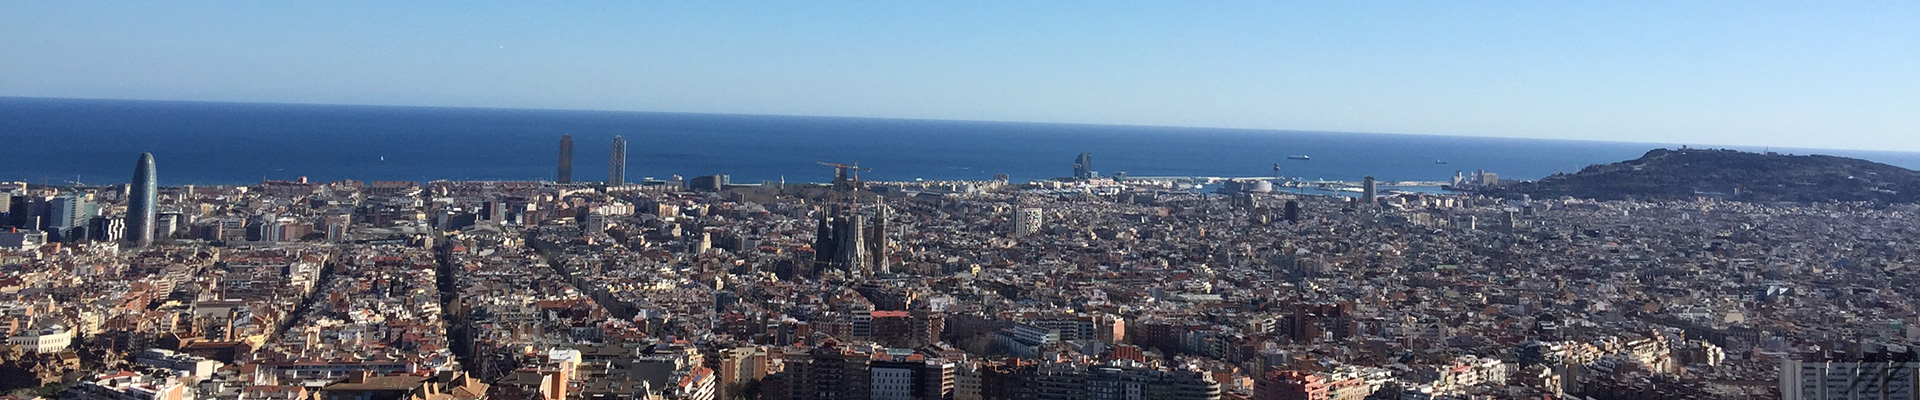 comment visiter Barcelone en 1 jour